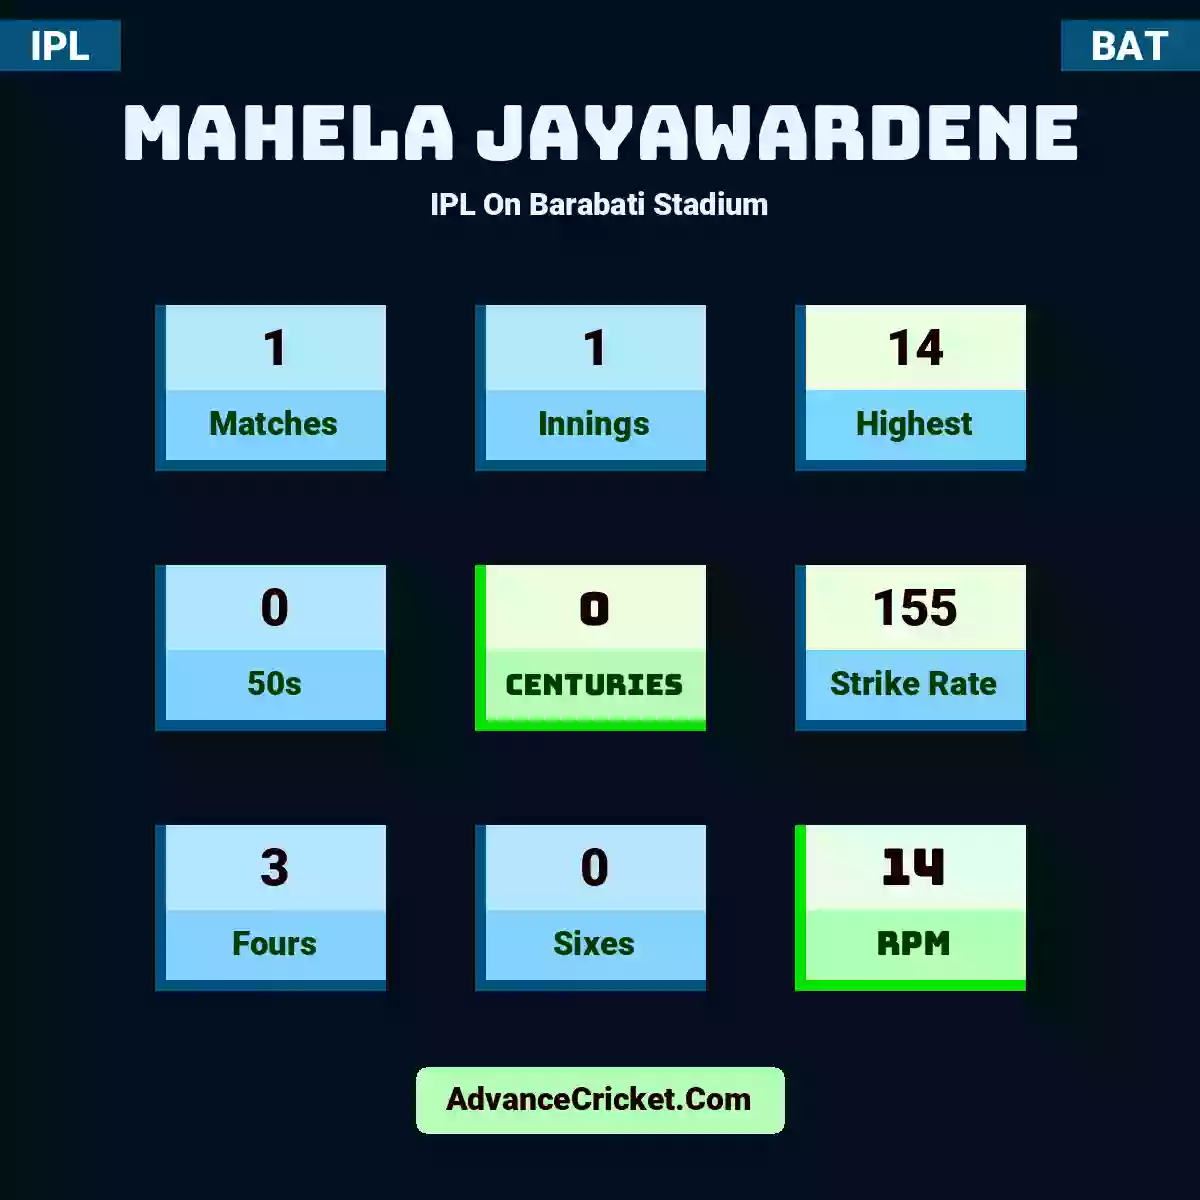 Mahela Jayawardene IPL  On Barabati Stadium, Mahela Jayawardene played 1 matches, scored 14 runs as highest, 0 half-centuries, and 0 centuries, with a strike rate of 155. M.Jayawardene hit 3 fours and 0 sixes, with an RPM of 14.